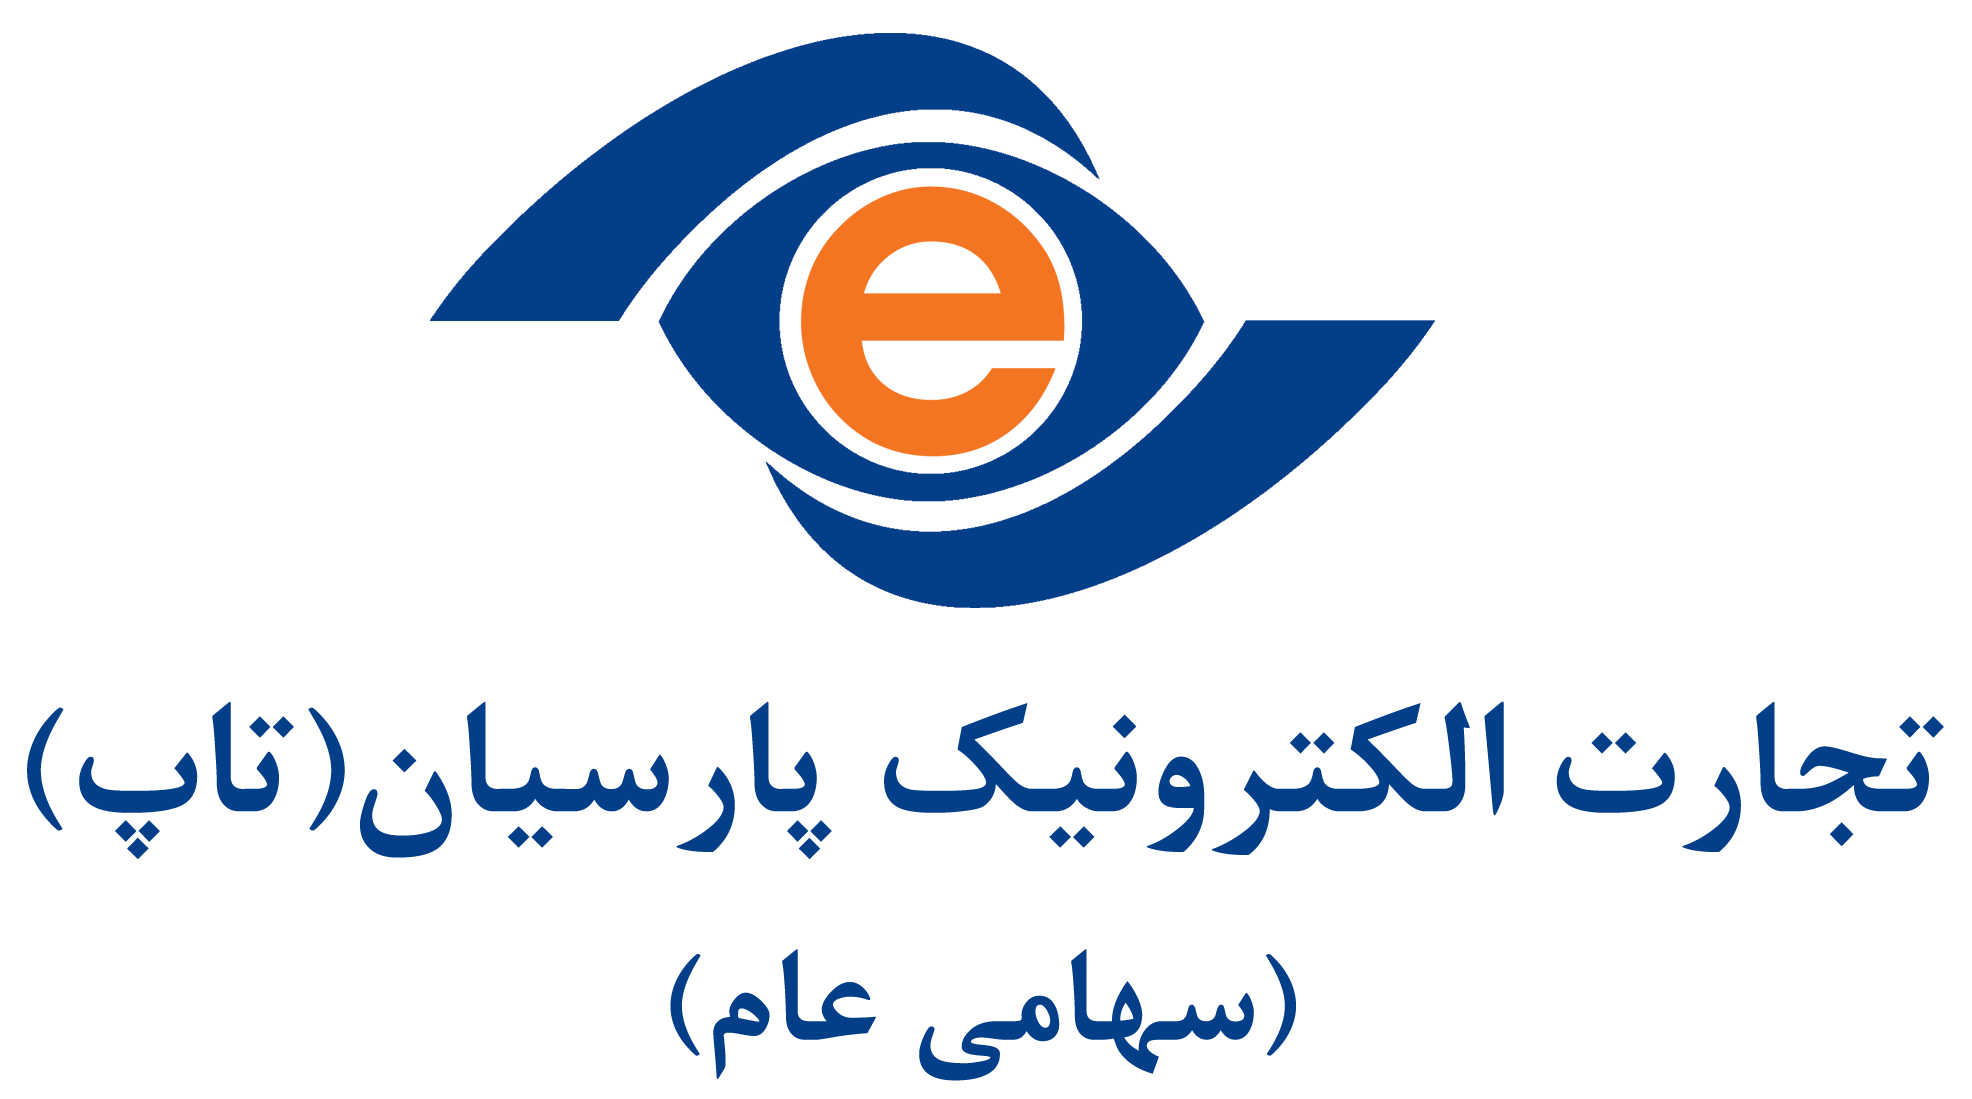 co-brand logo